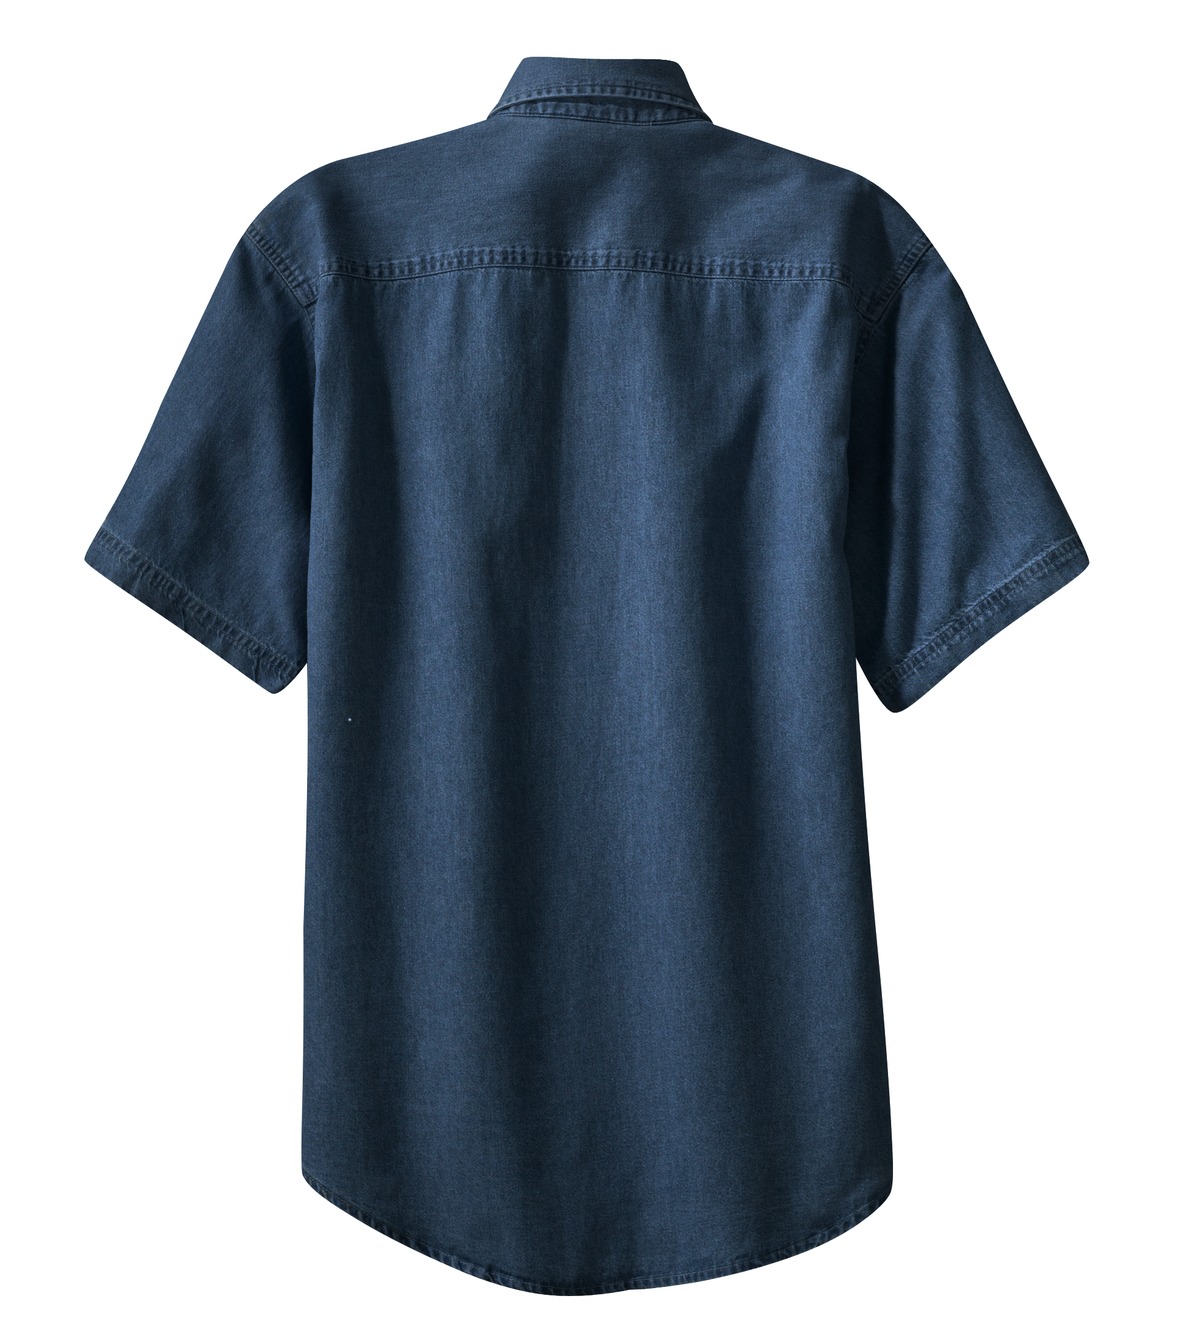 "Port & Company Short Sleeve Value Denim Shirt (SP11) Ink Blue, XL" - image 2 of 6